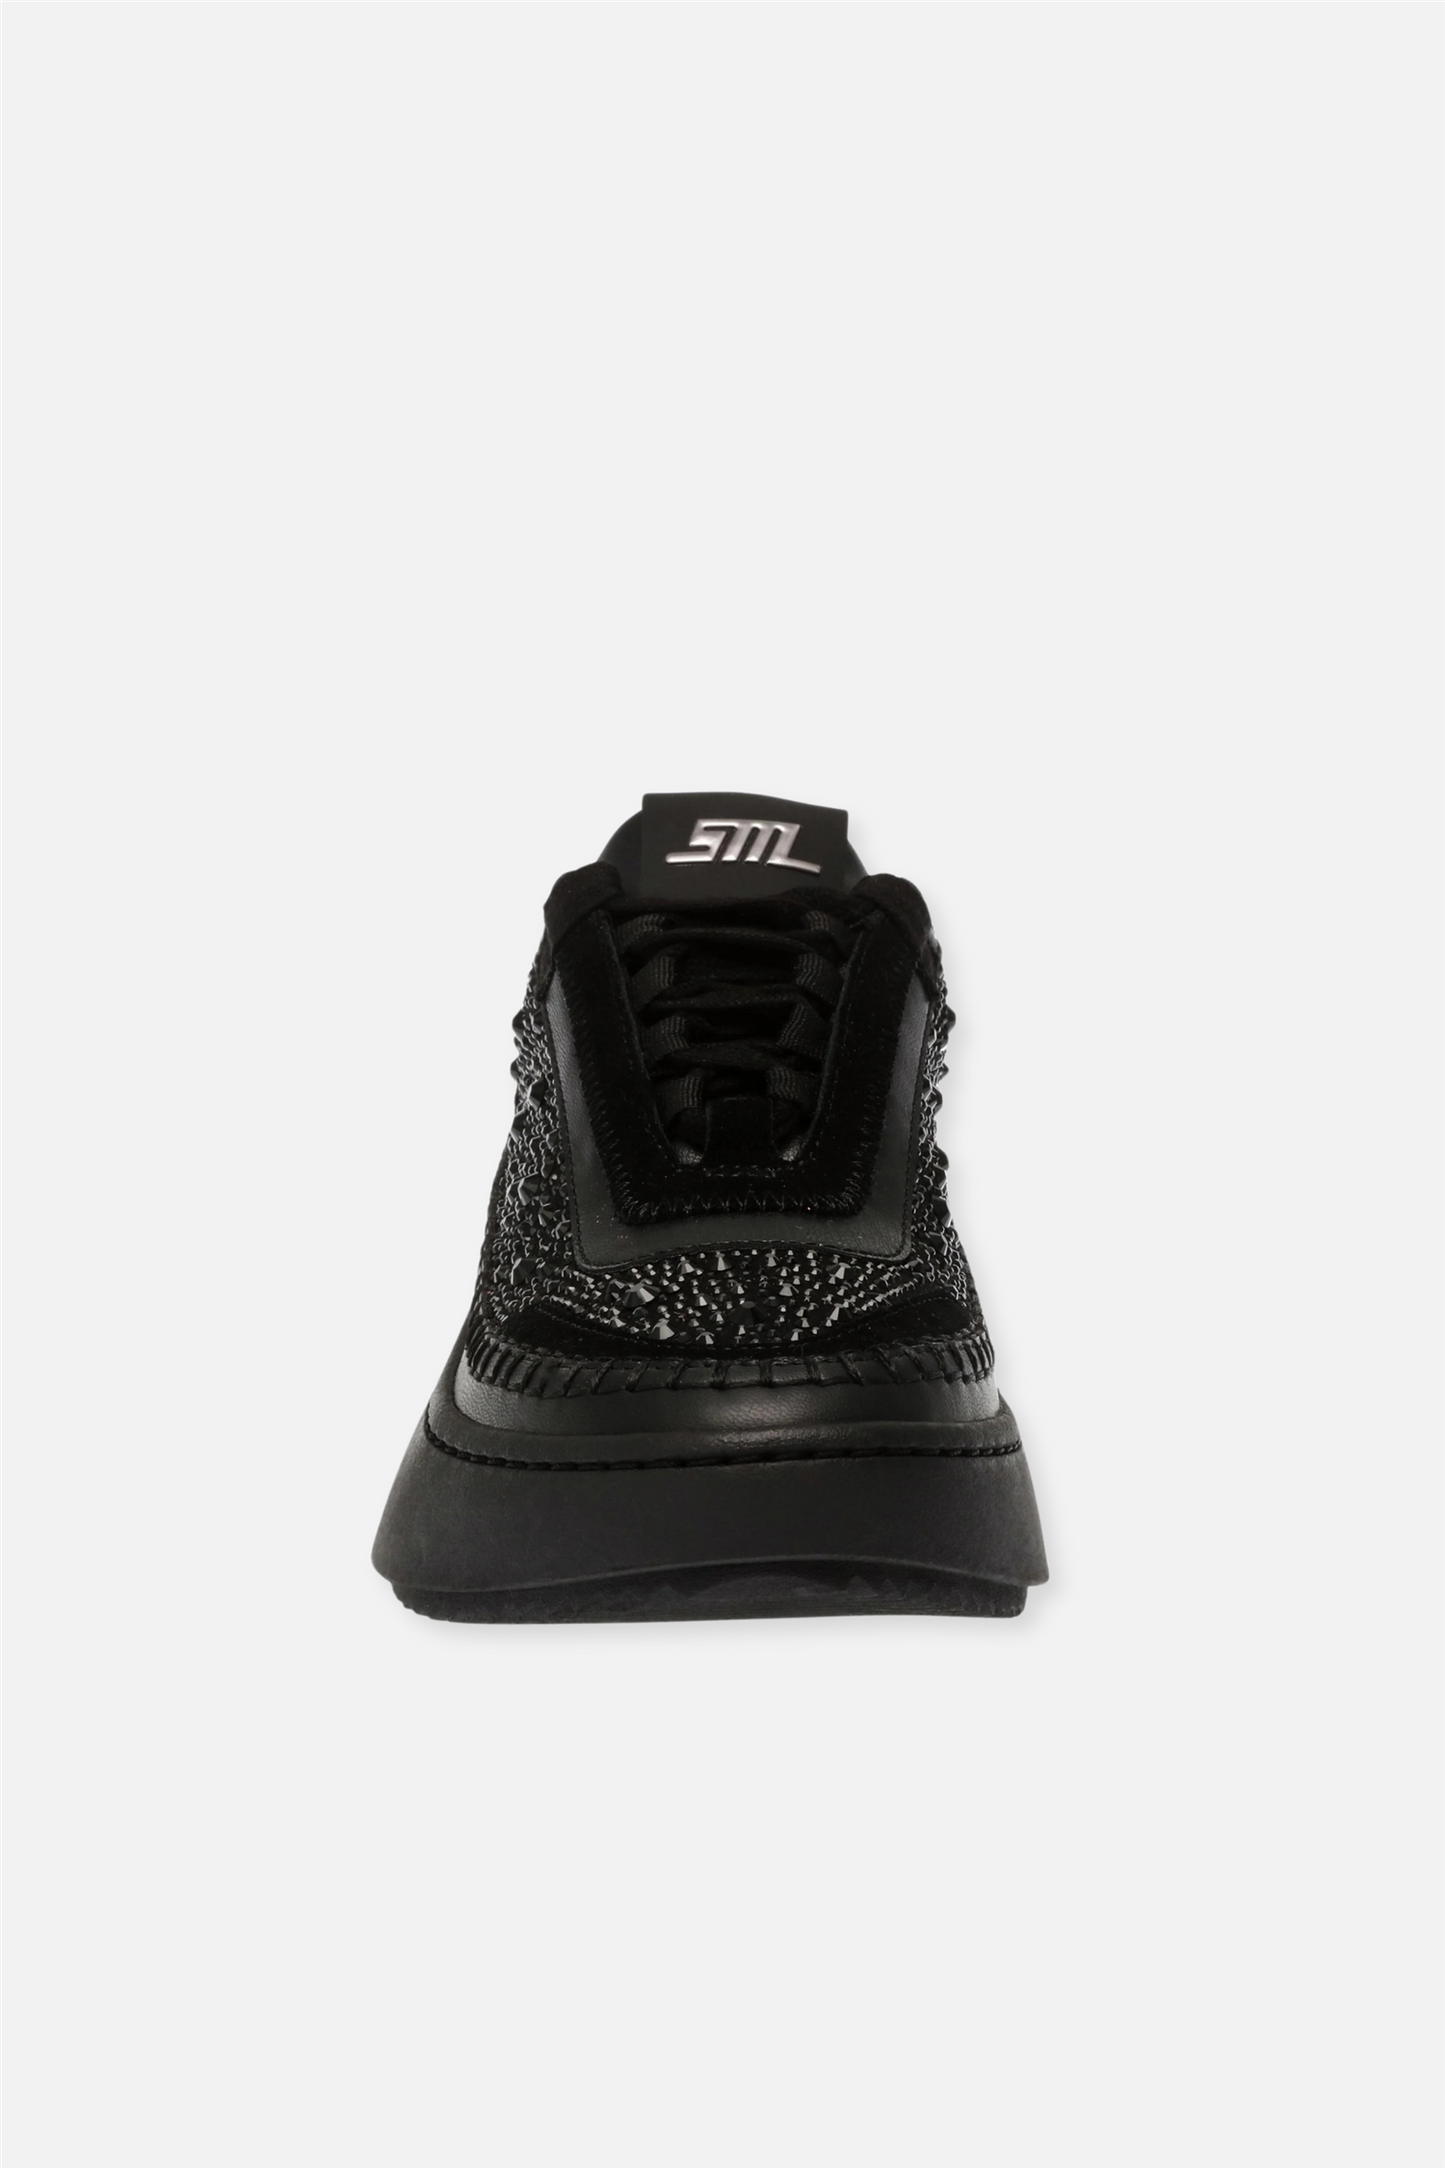 Doubletake-R Sneaker Black/Stone